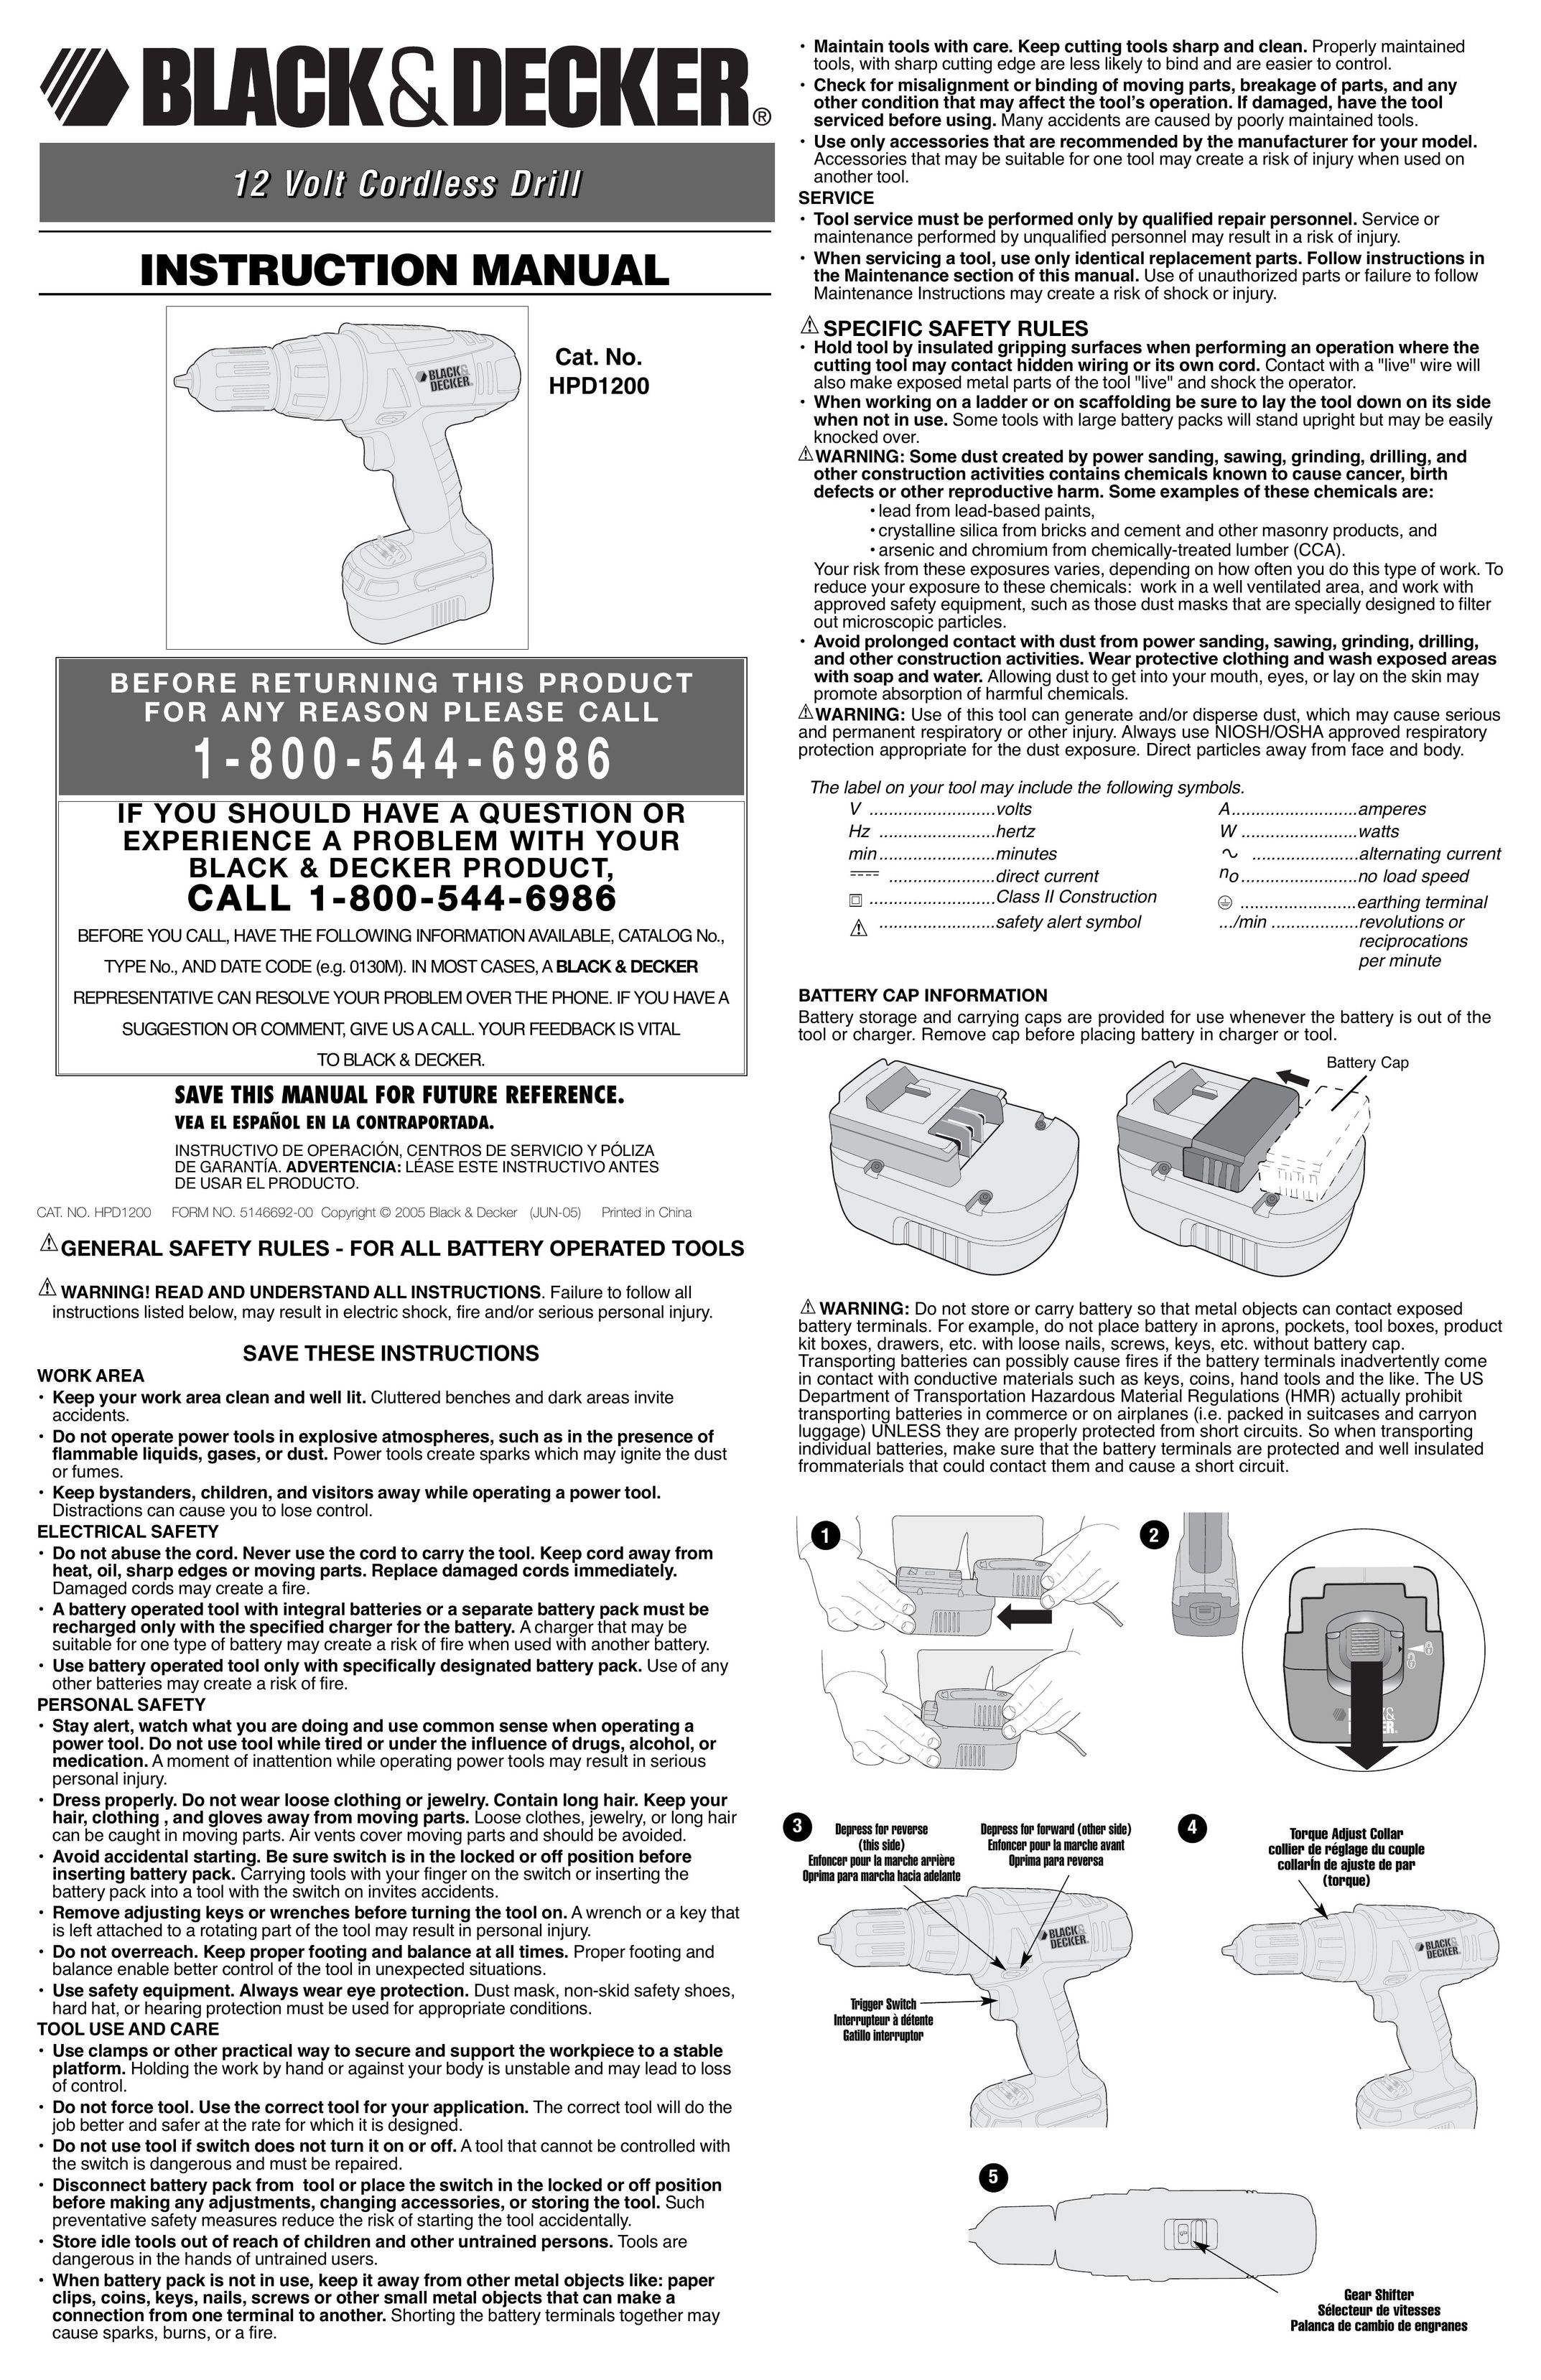 Black & Decker 5146692-00 Cordless Drill User Manual